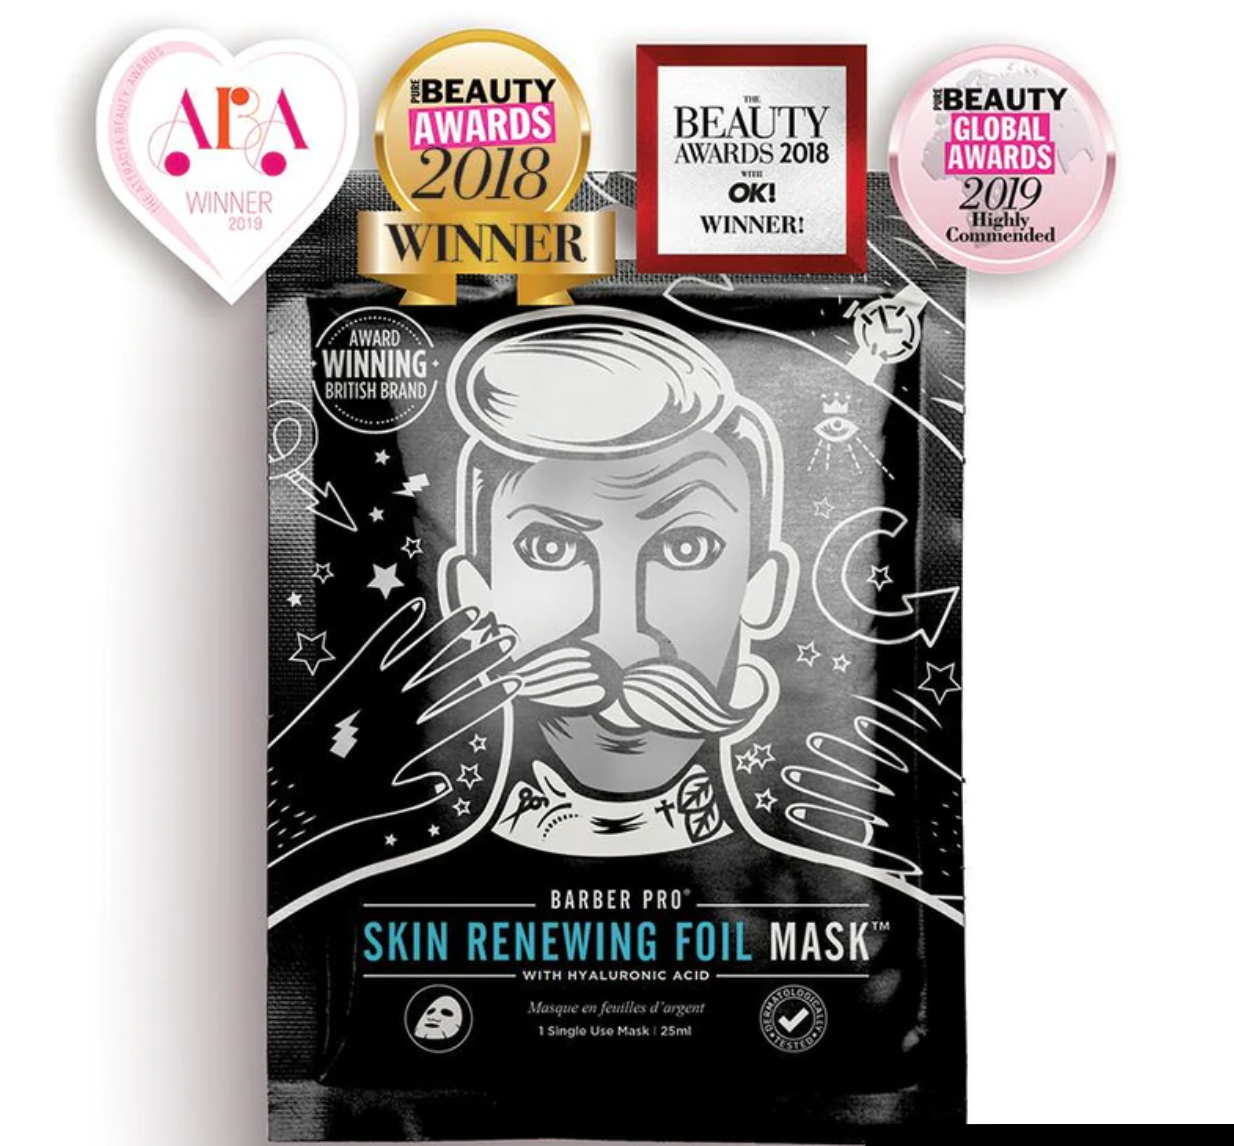 BarberPro Skin Renewing Foil Mask with Hyaluronic Acid & Q10